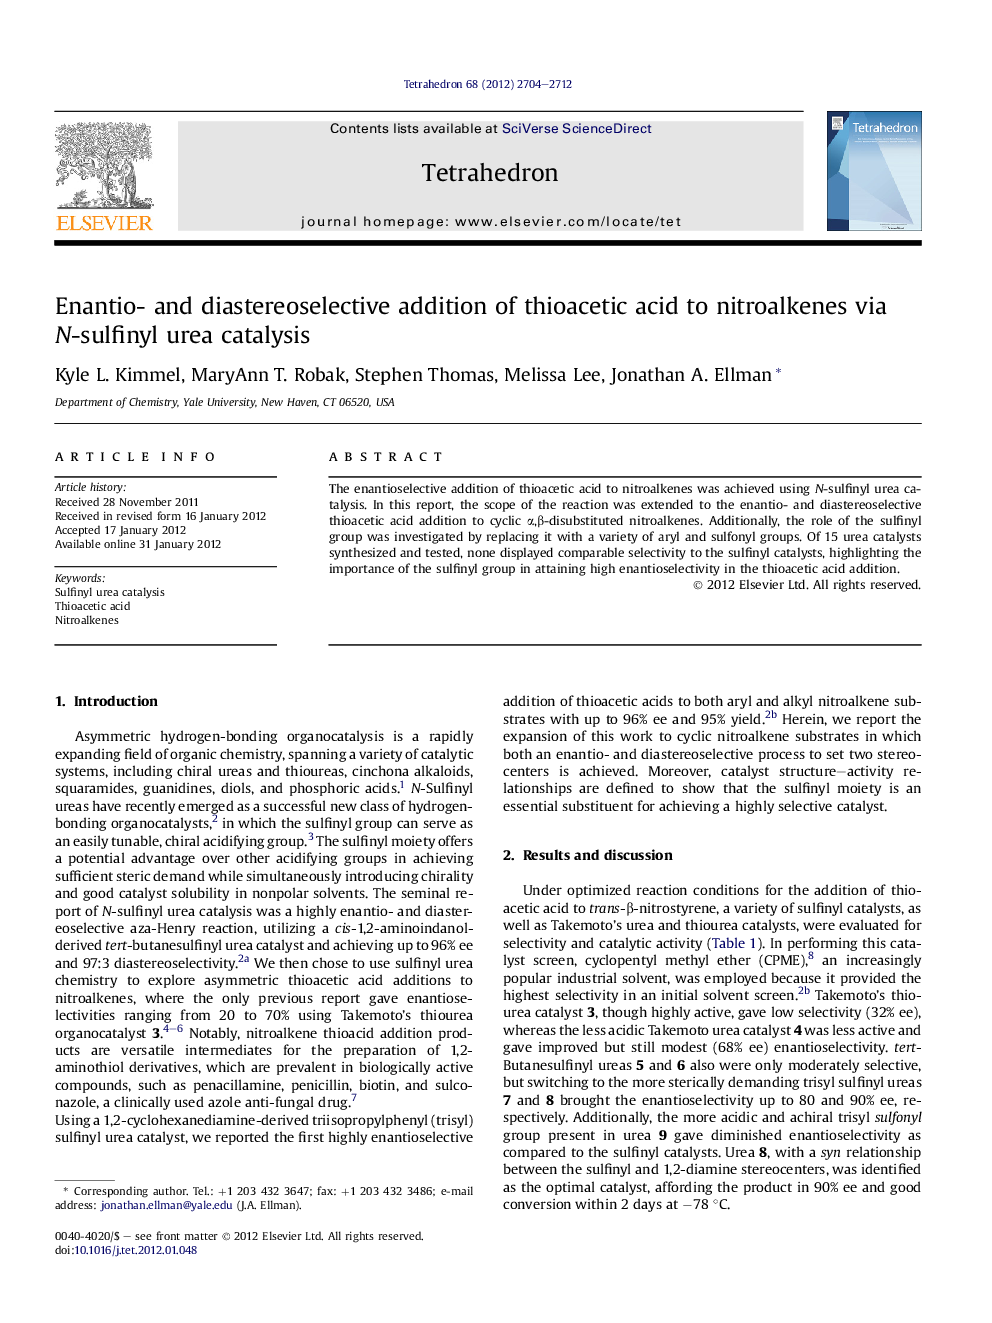 Enantio- and diastereoselective addition of thioacetic acid to nitroalkenes via N-sulfinyl urea catalysis